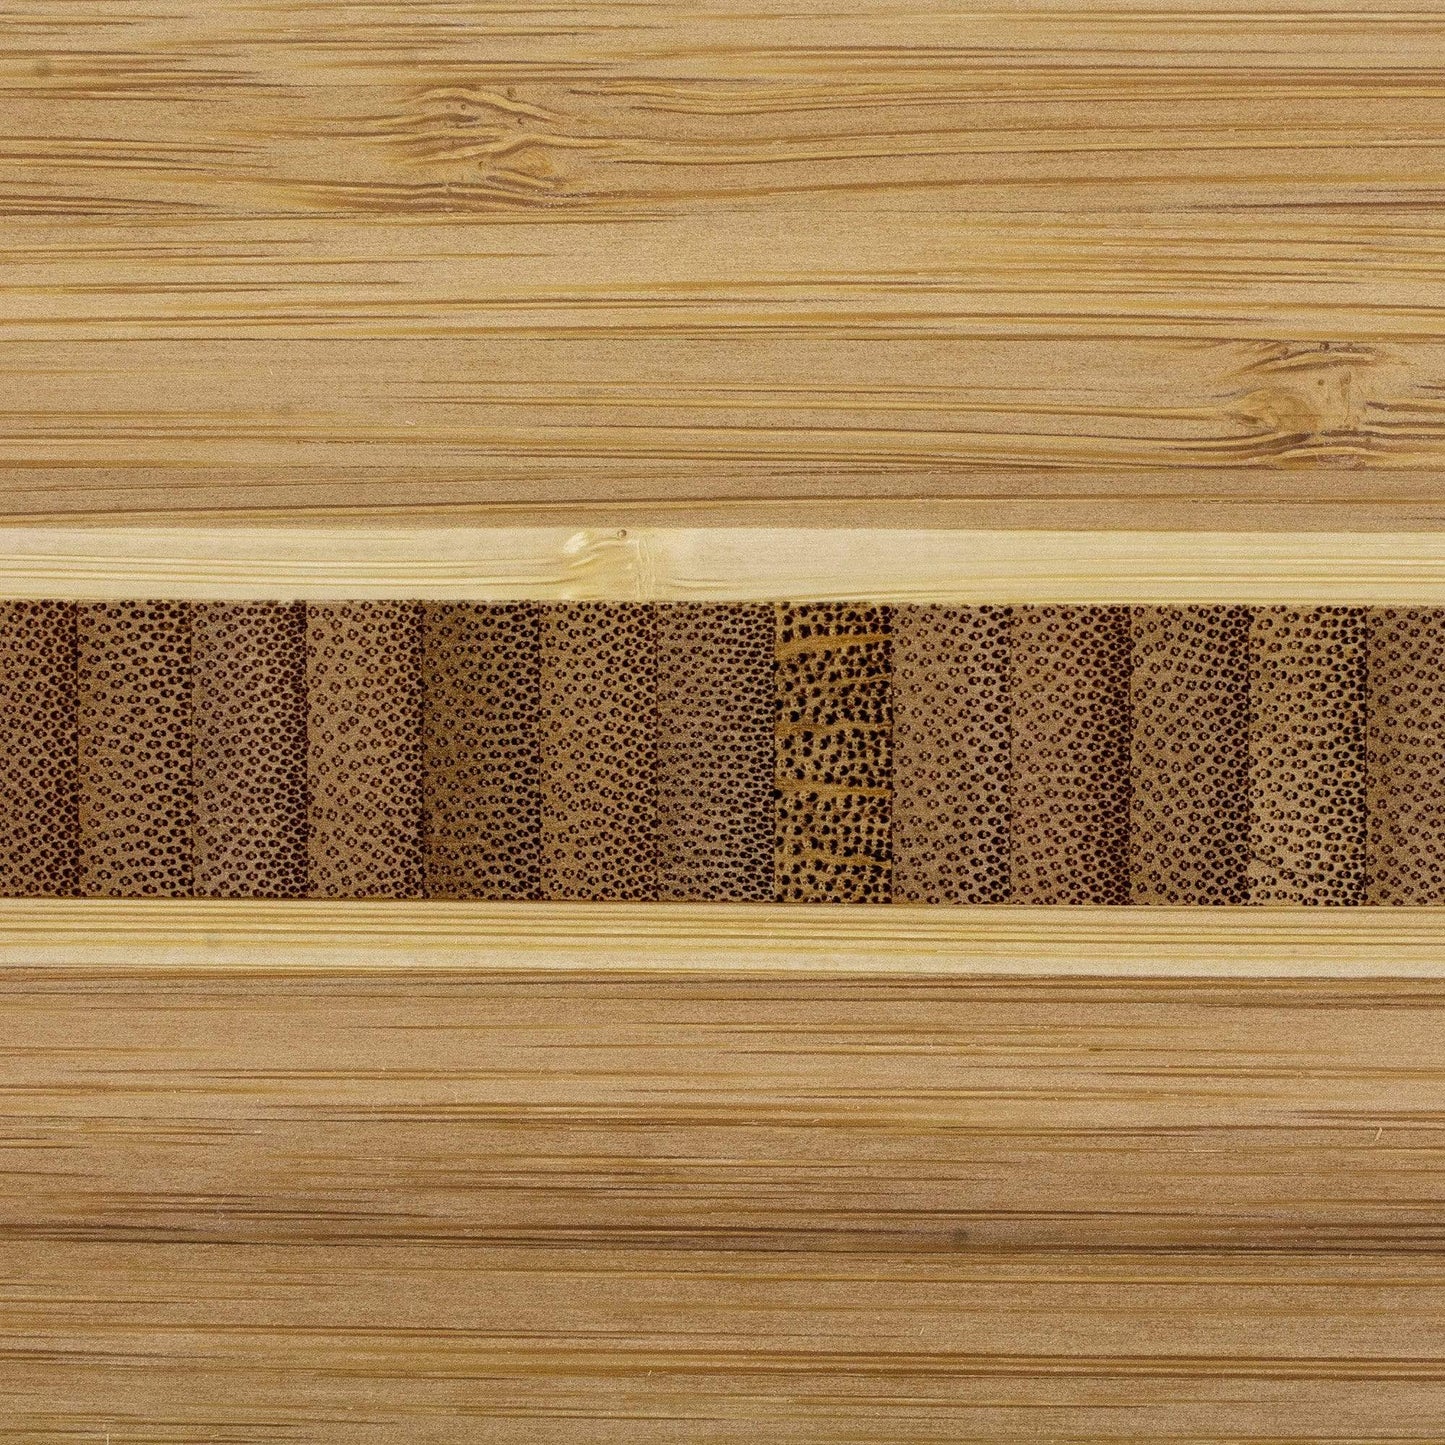 close-up of inlay of wood board.